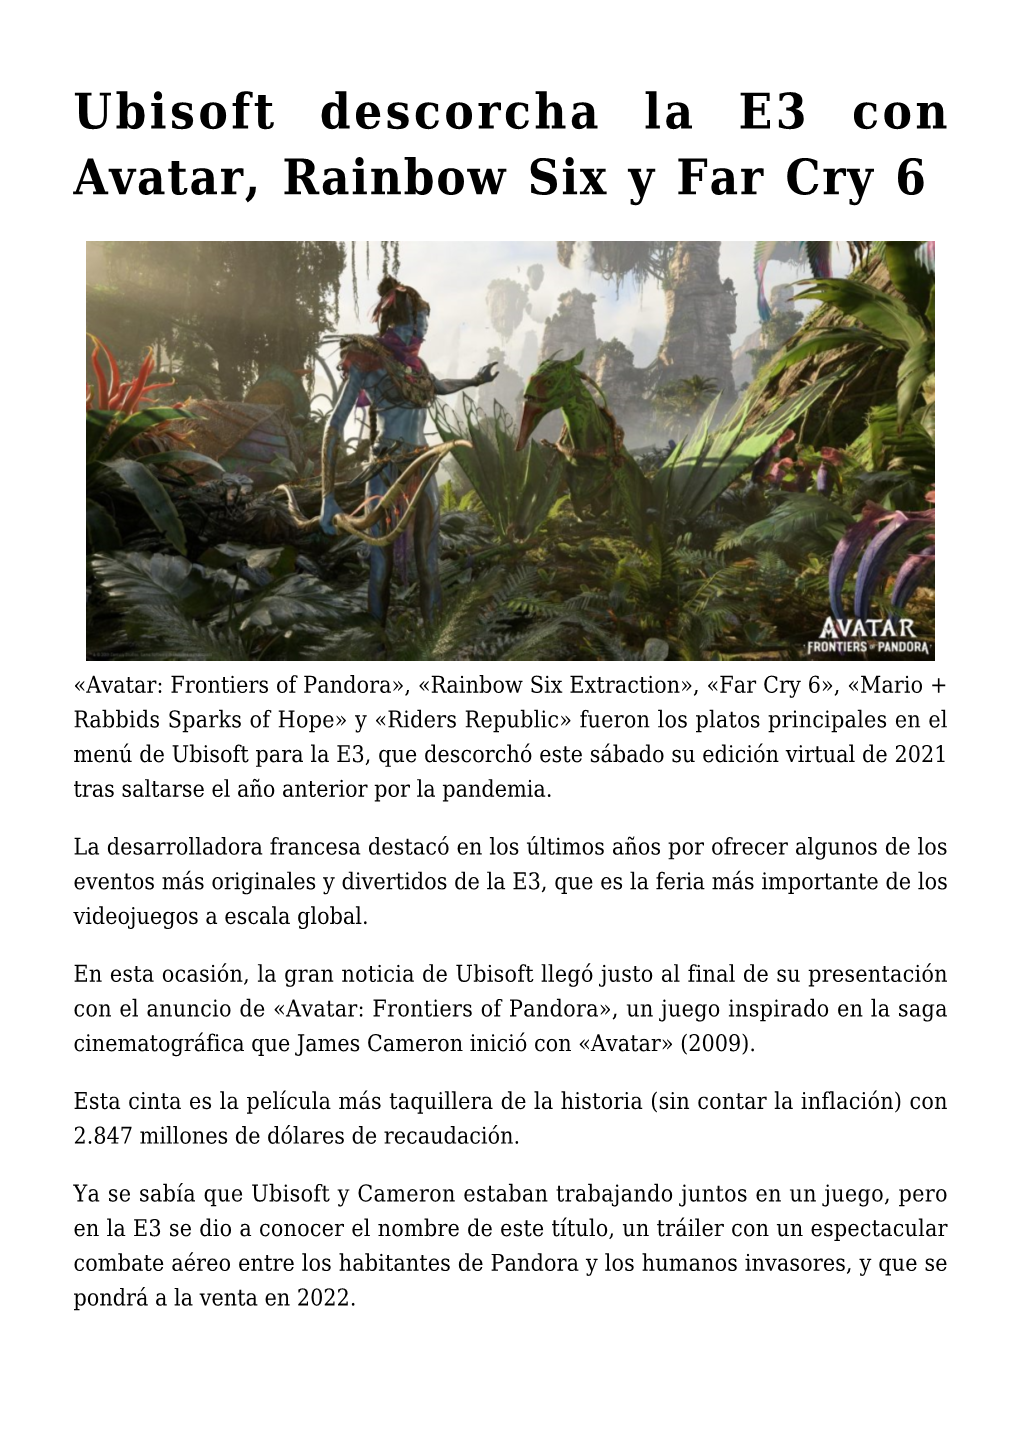 Ubisoft Descorcha La E3 Con Avatar, Rainbow Six Y Far Cry 6